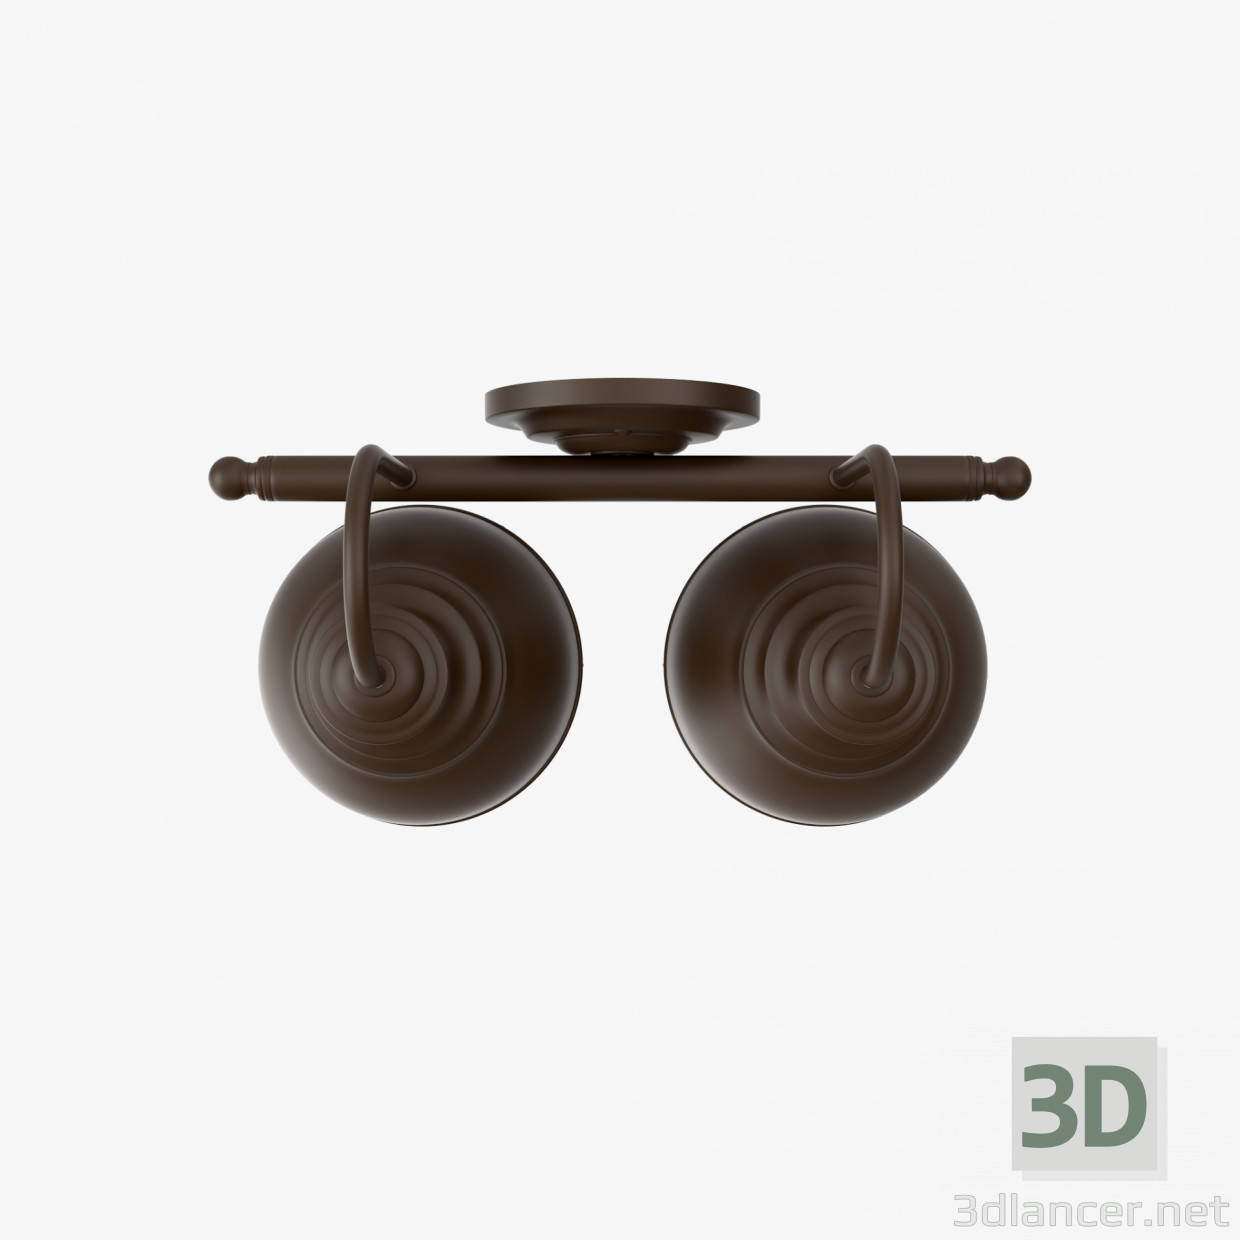 3d 3D model bra Quorum arbor model buy - render